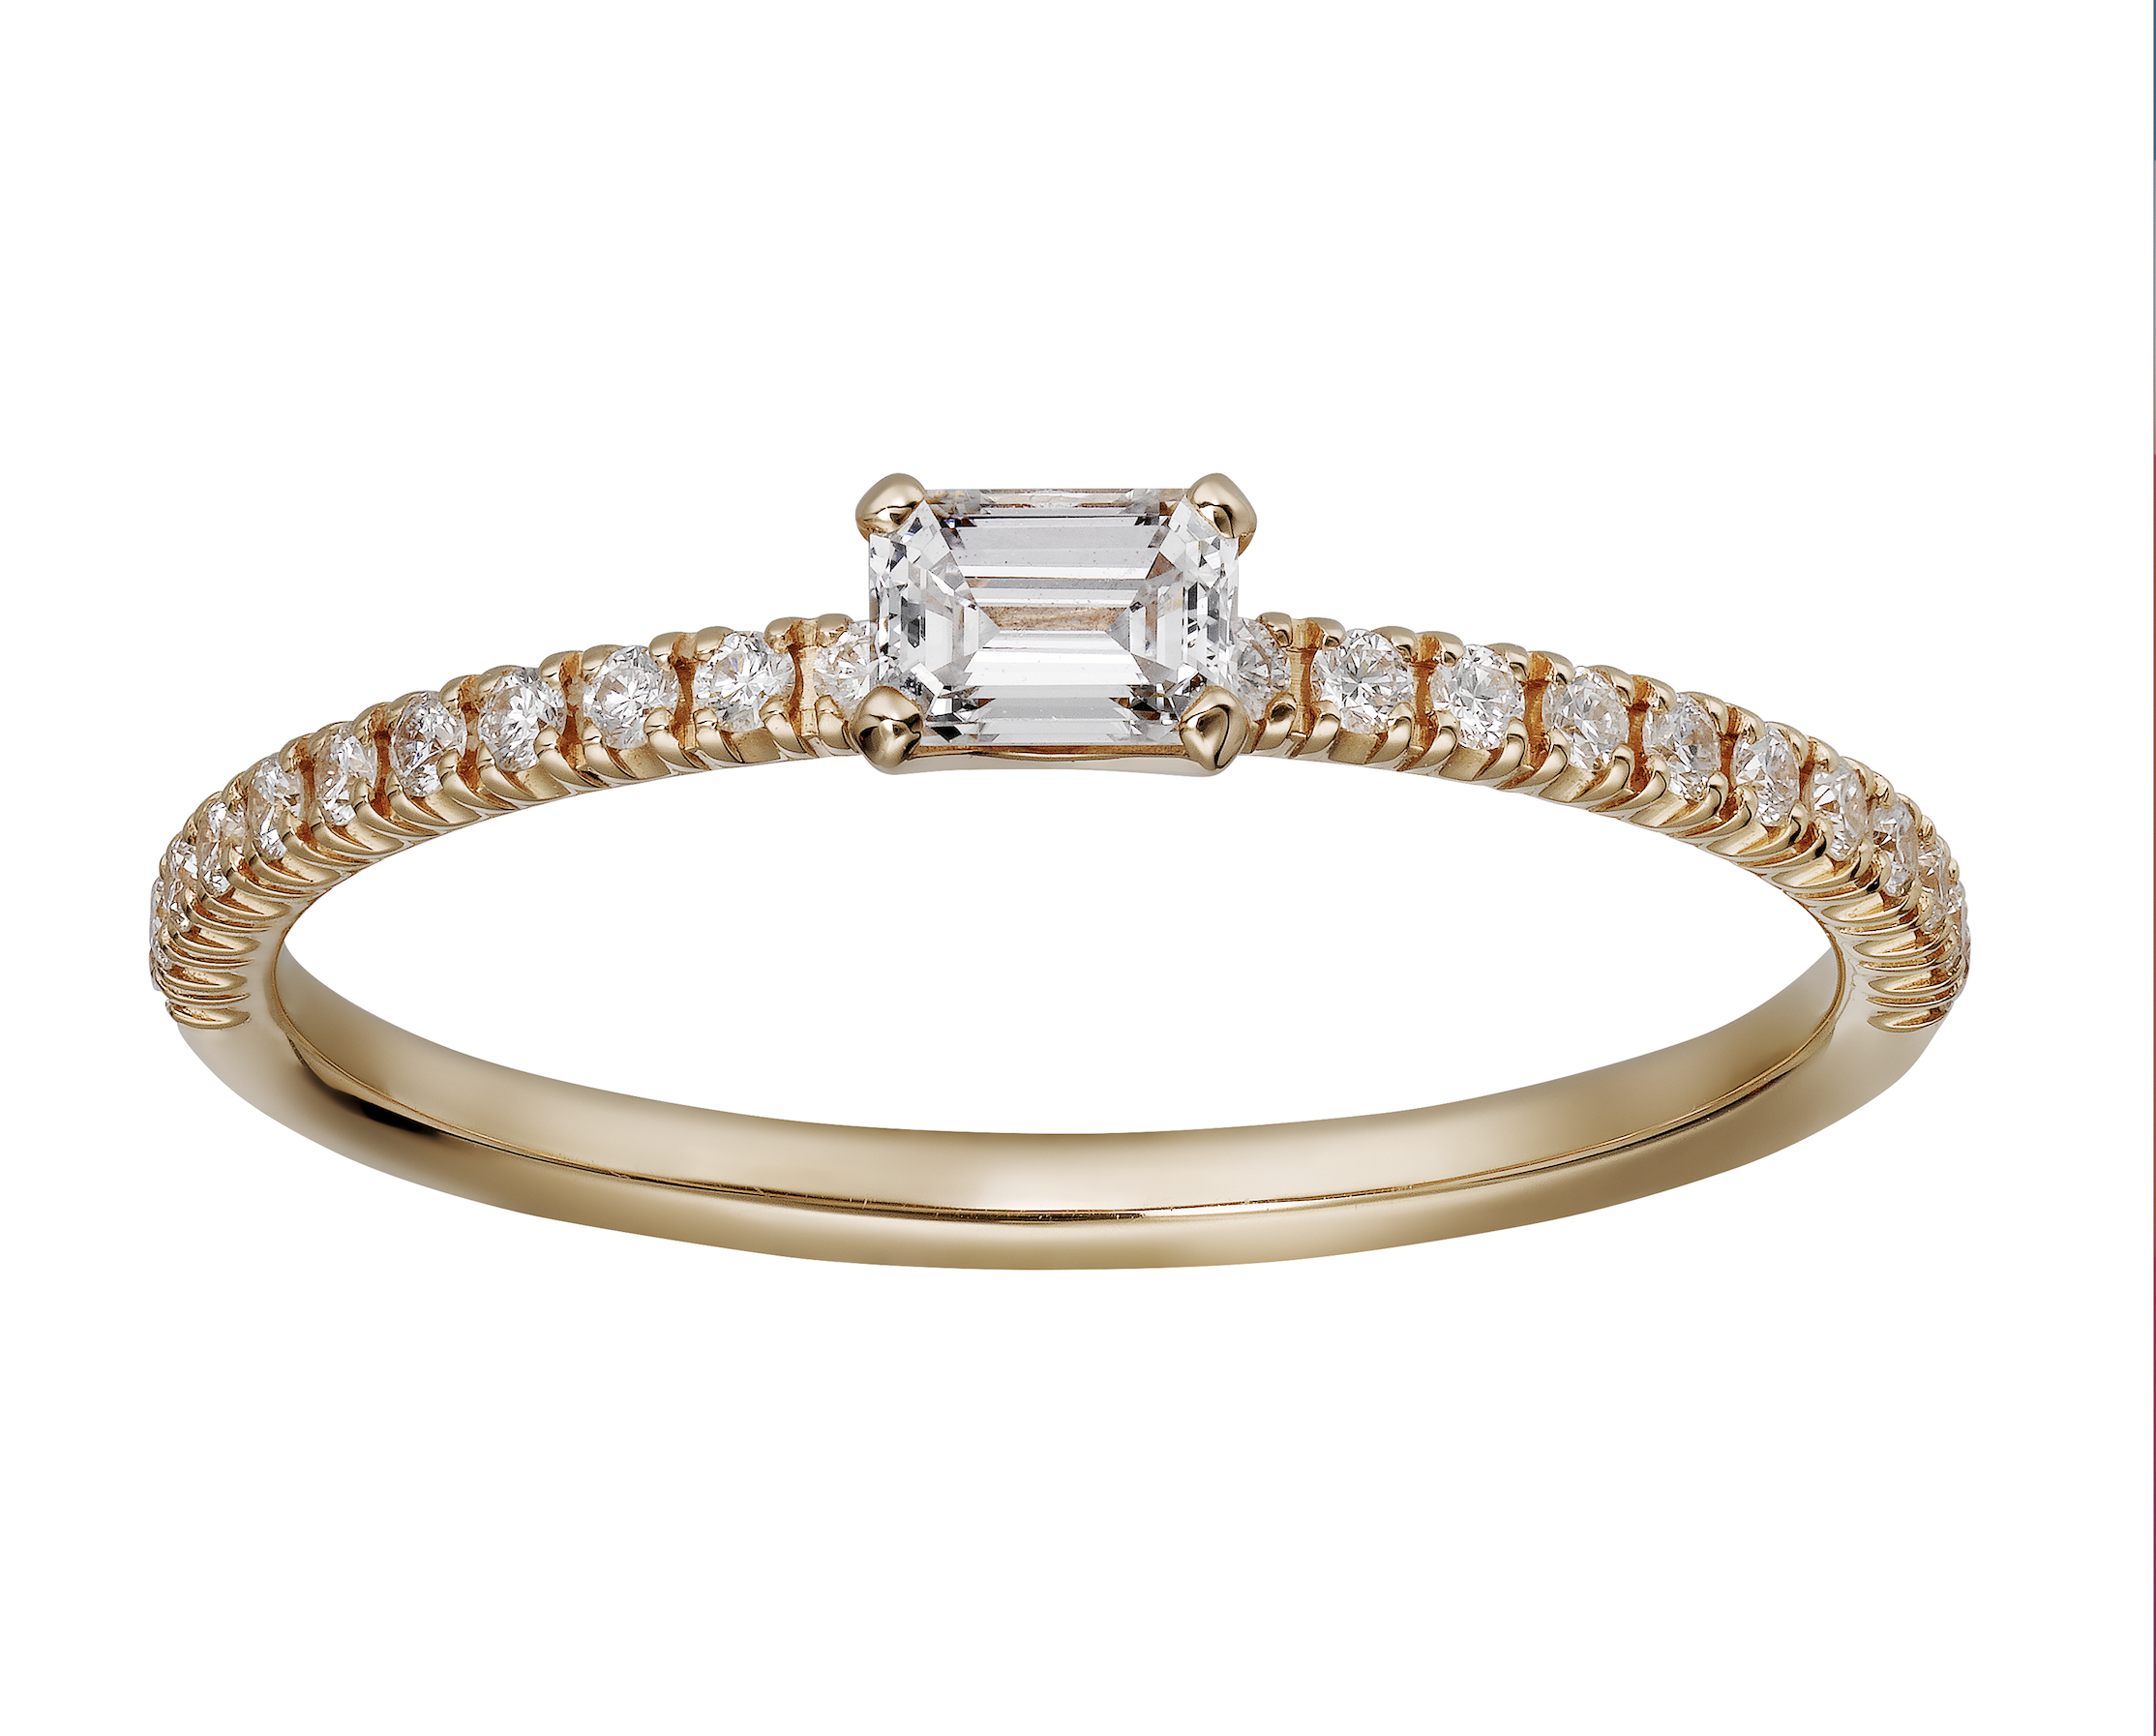  Étincelle de Cartier ring, 18k rose gold, diamonds, $3,100. Available at Cartier boutiques nationwide. For more information please visit&nbsp; www.cartier.com &nbsp;or contact 1-800-CARTIER. 